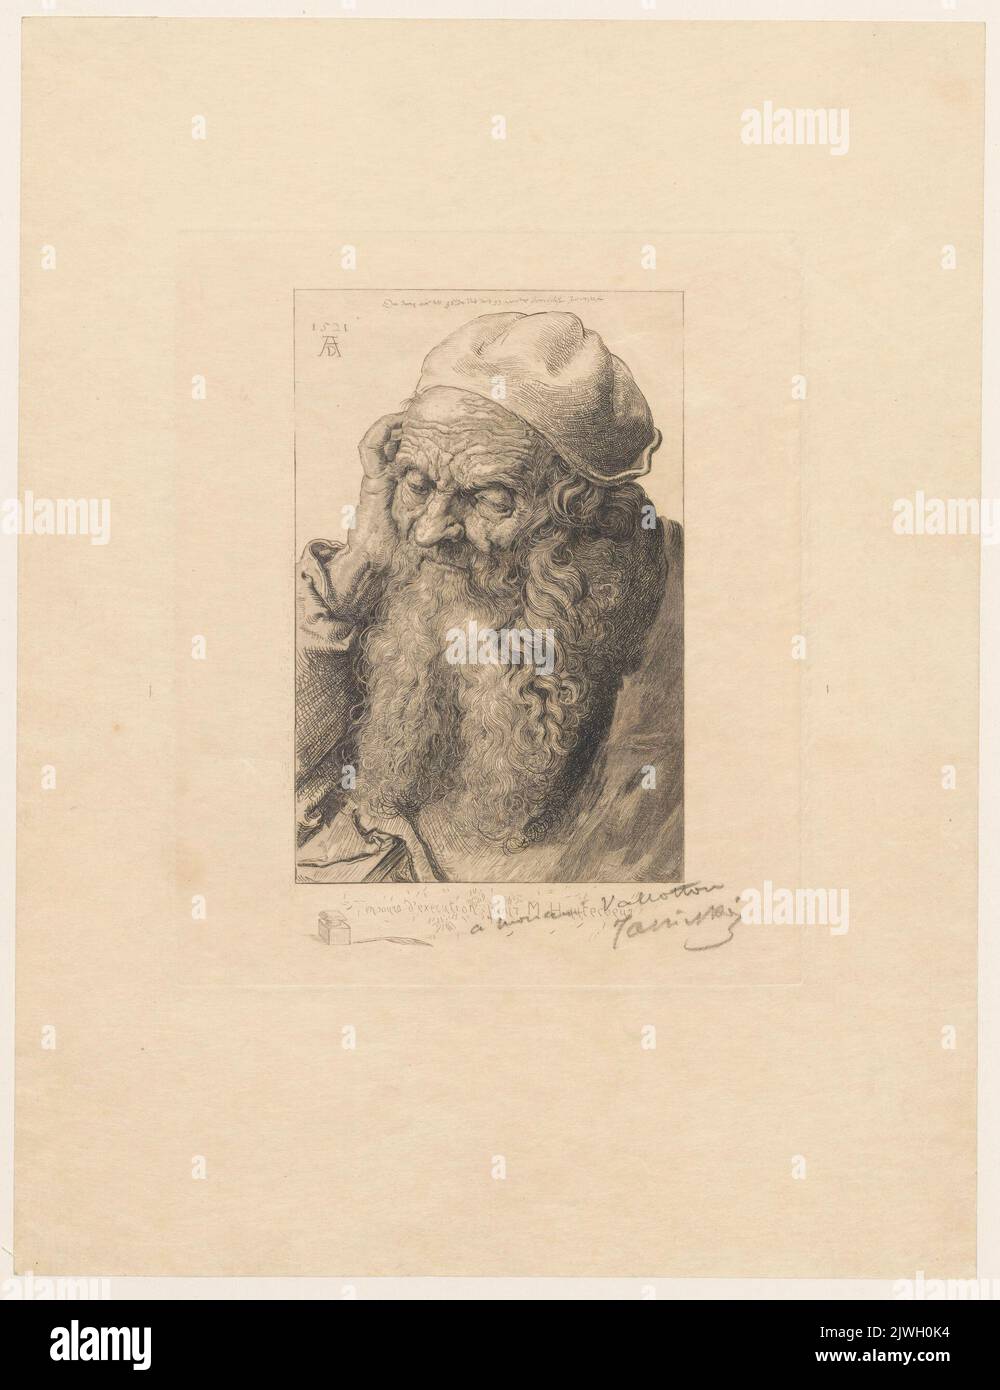 Tete de Vieillard, stato VI. Wittmann Charles, Imprimérie, Parigi (fl. CA 1886-1908), tipografia, Jasiński, Feliks Stanisław (1862-1901), artista grafico, Dürer, Albrecht (1471-1528), disegnatore, cartoonista, Hautecoeur, Jules (fl. 1885-1902), editore Foto Stock